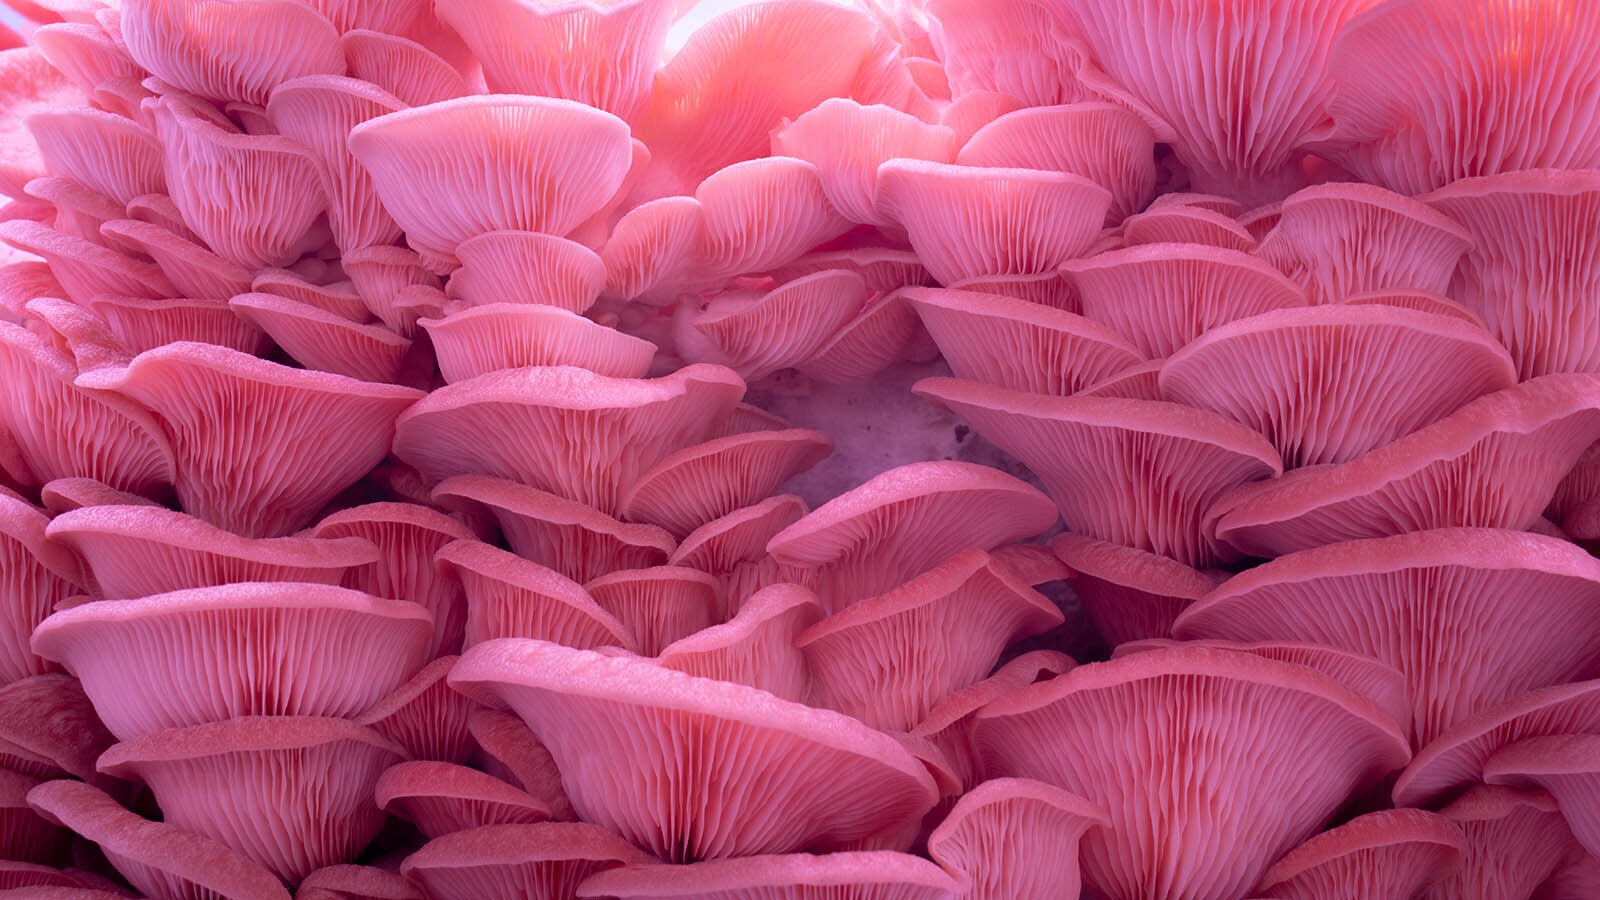 Pink oyster mushrooms.